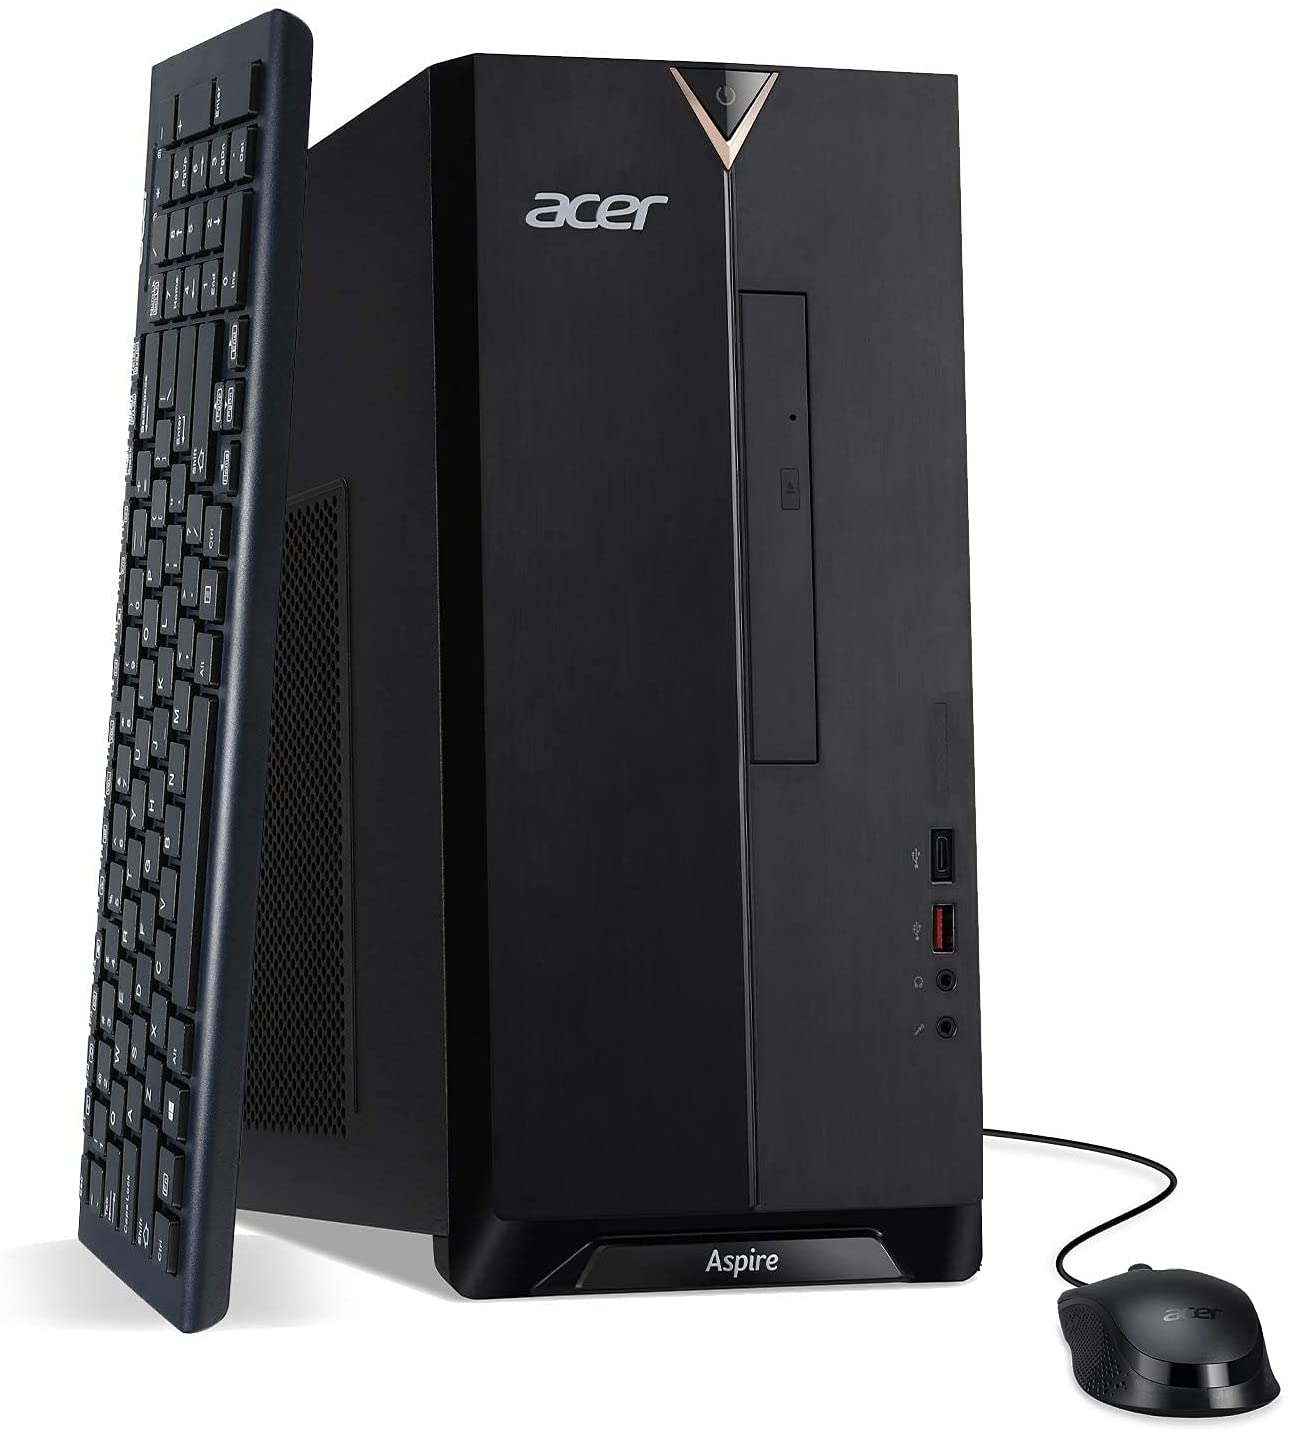 Acer Aspire TC-1660-UA92 Desktop | 10th Gen Intel Core i5-10400 6-Core Processor | 12GB 2666MHz DDR4 | 512GB NVMe M.2 SSD | 8X DVD | Intel Wireless Wi-Fi 6 | Bluetooth 5.2 | Windows 10 Home